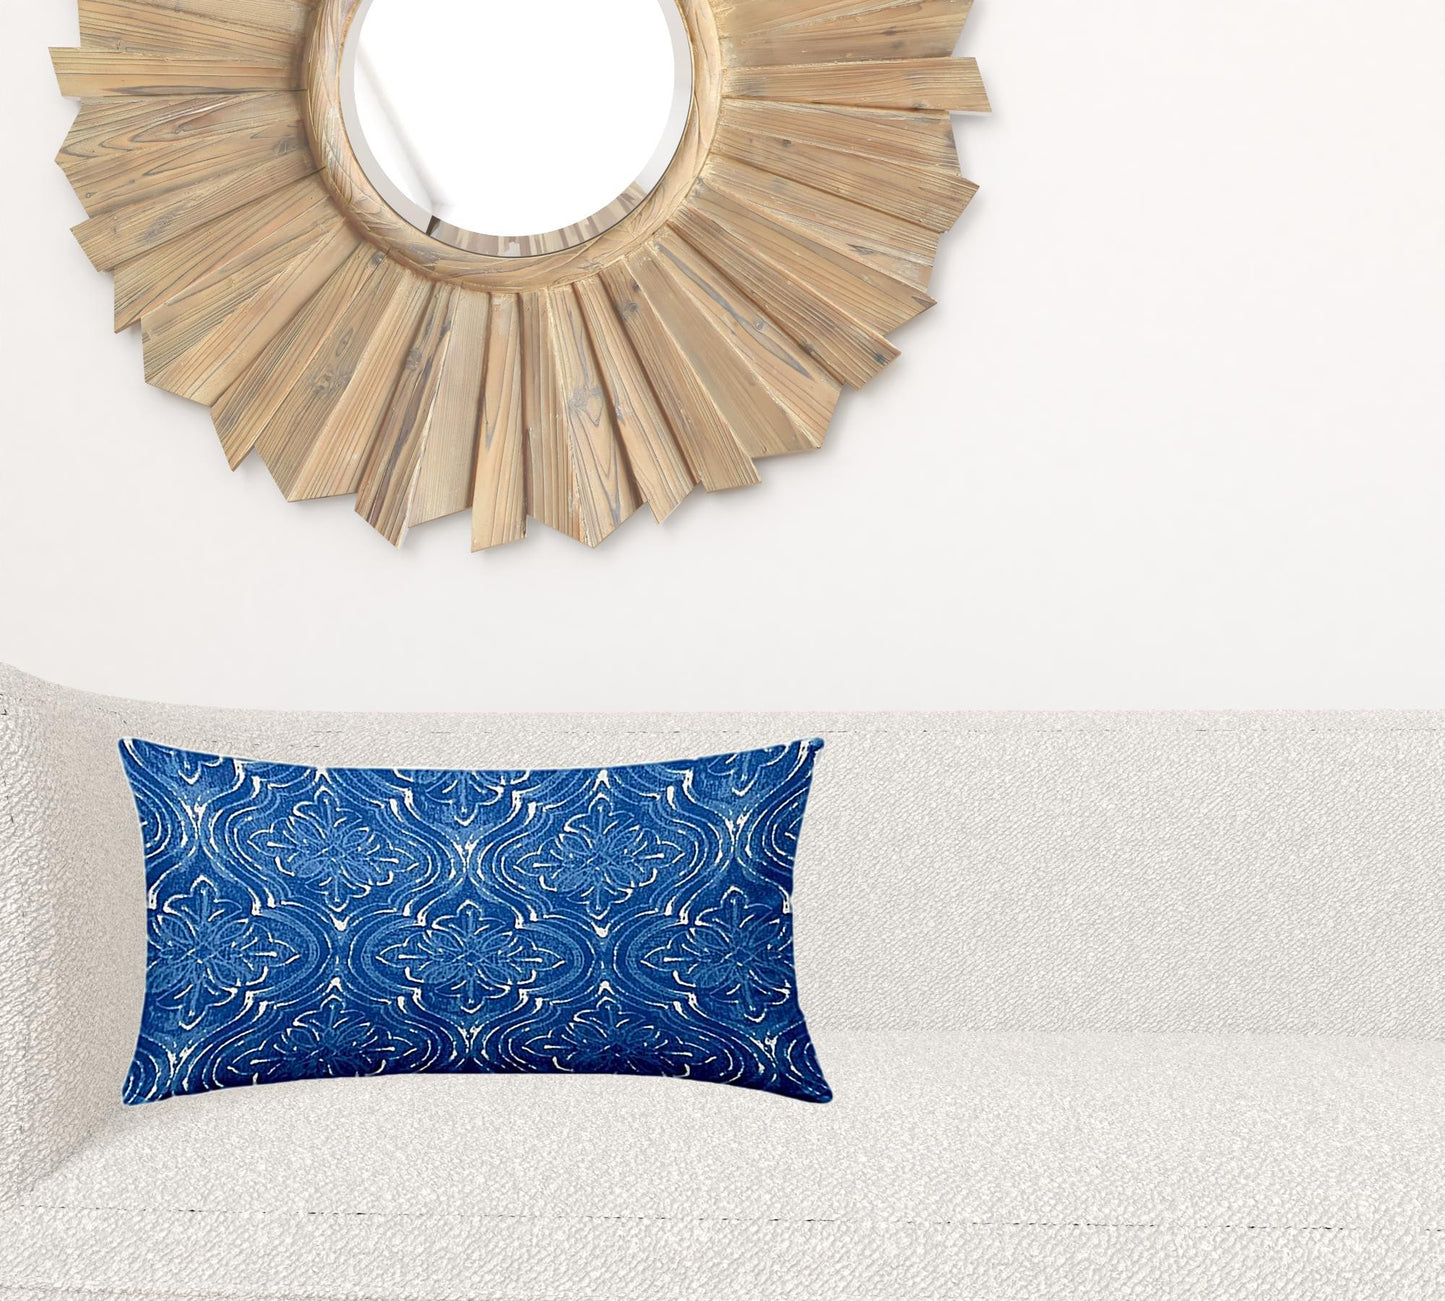 14" X 24" Blue And White Enveloped Ikat Lumbar Indoor Outdoor Pillow